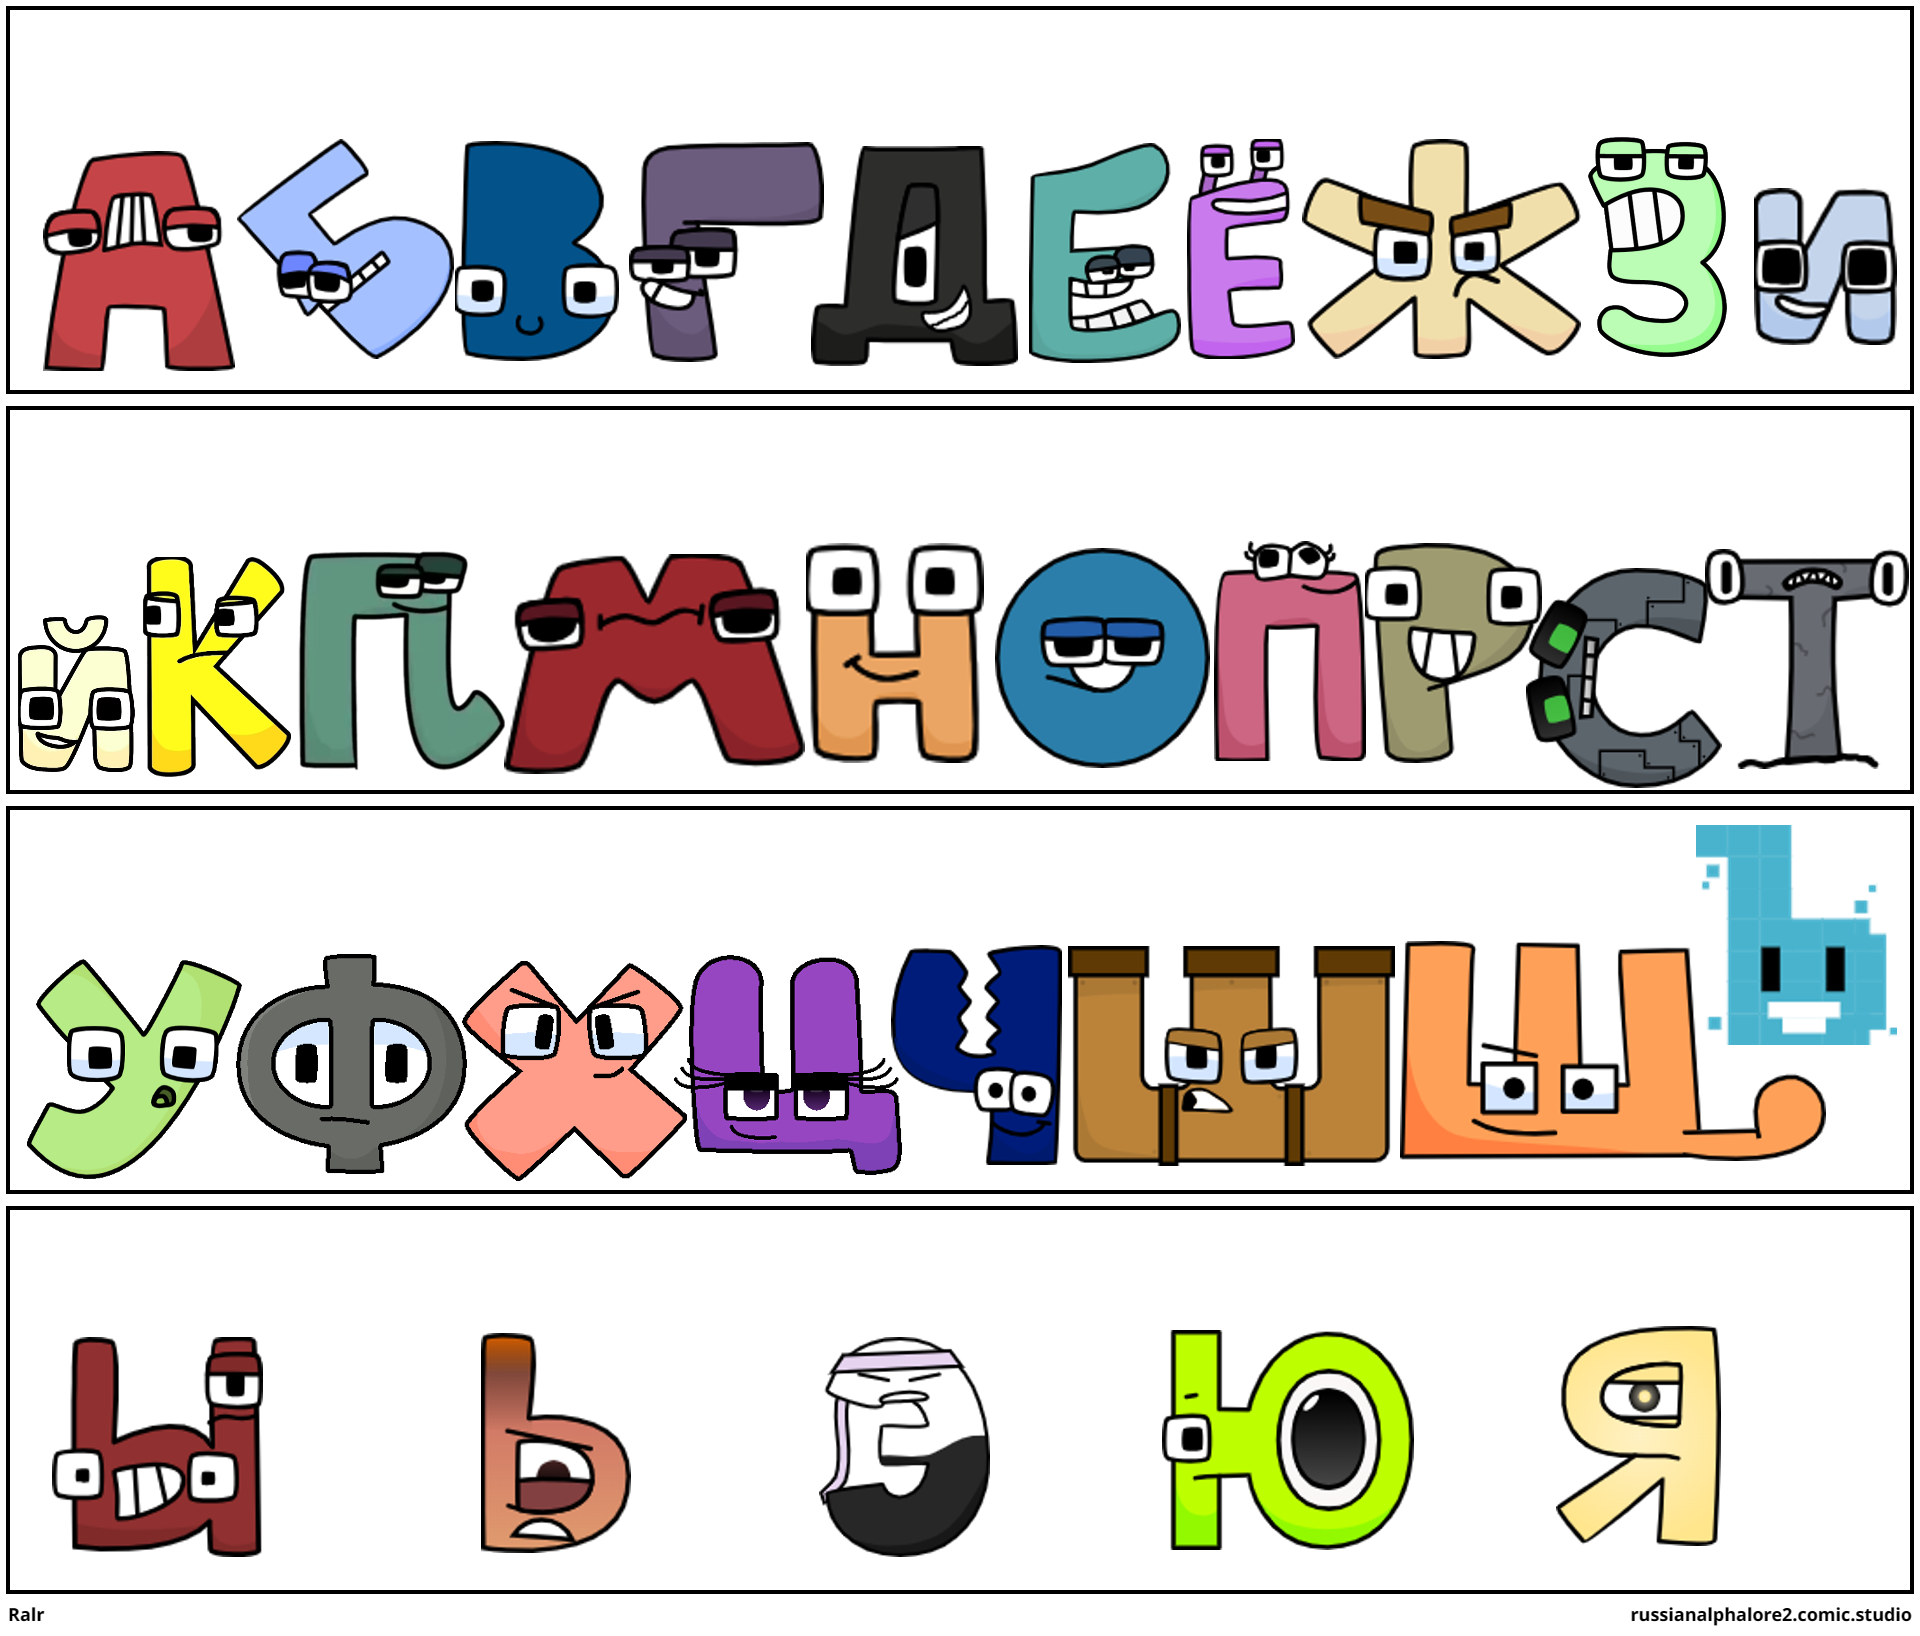 kazakh and russian alphabet lore part 2 - Comic Studio